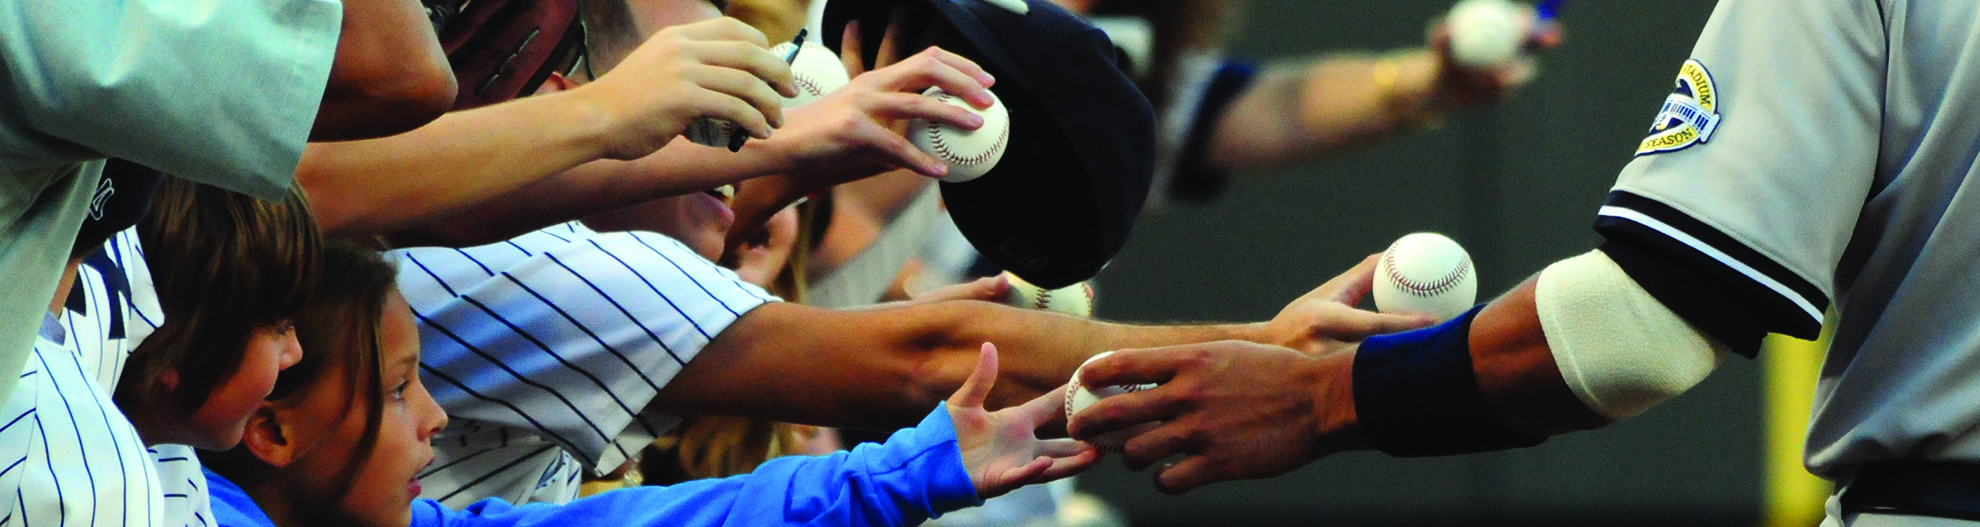 baseball player signing autographs